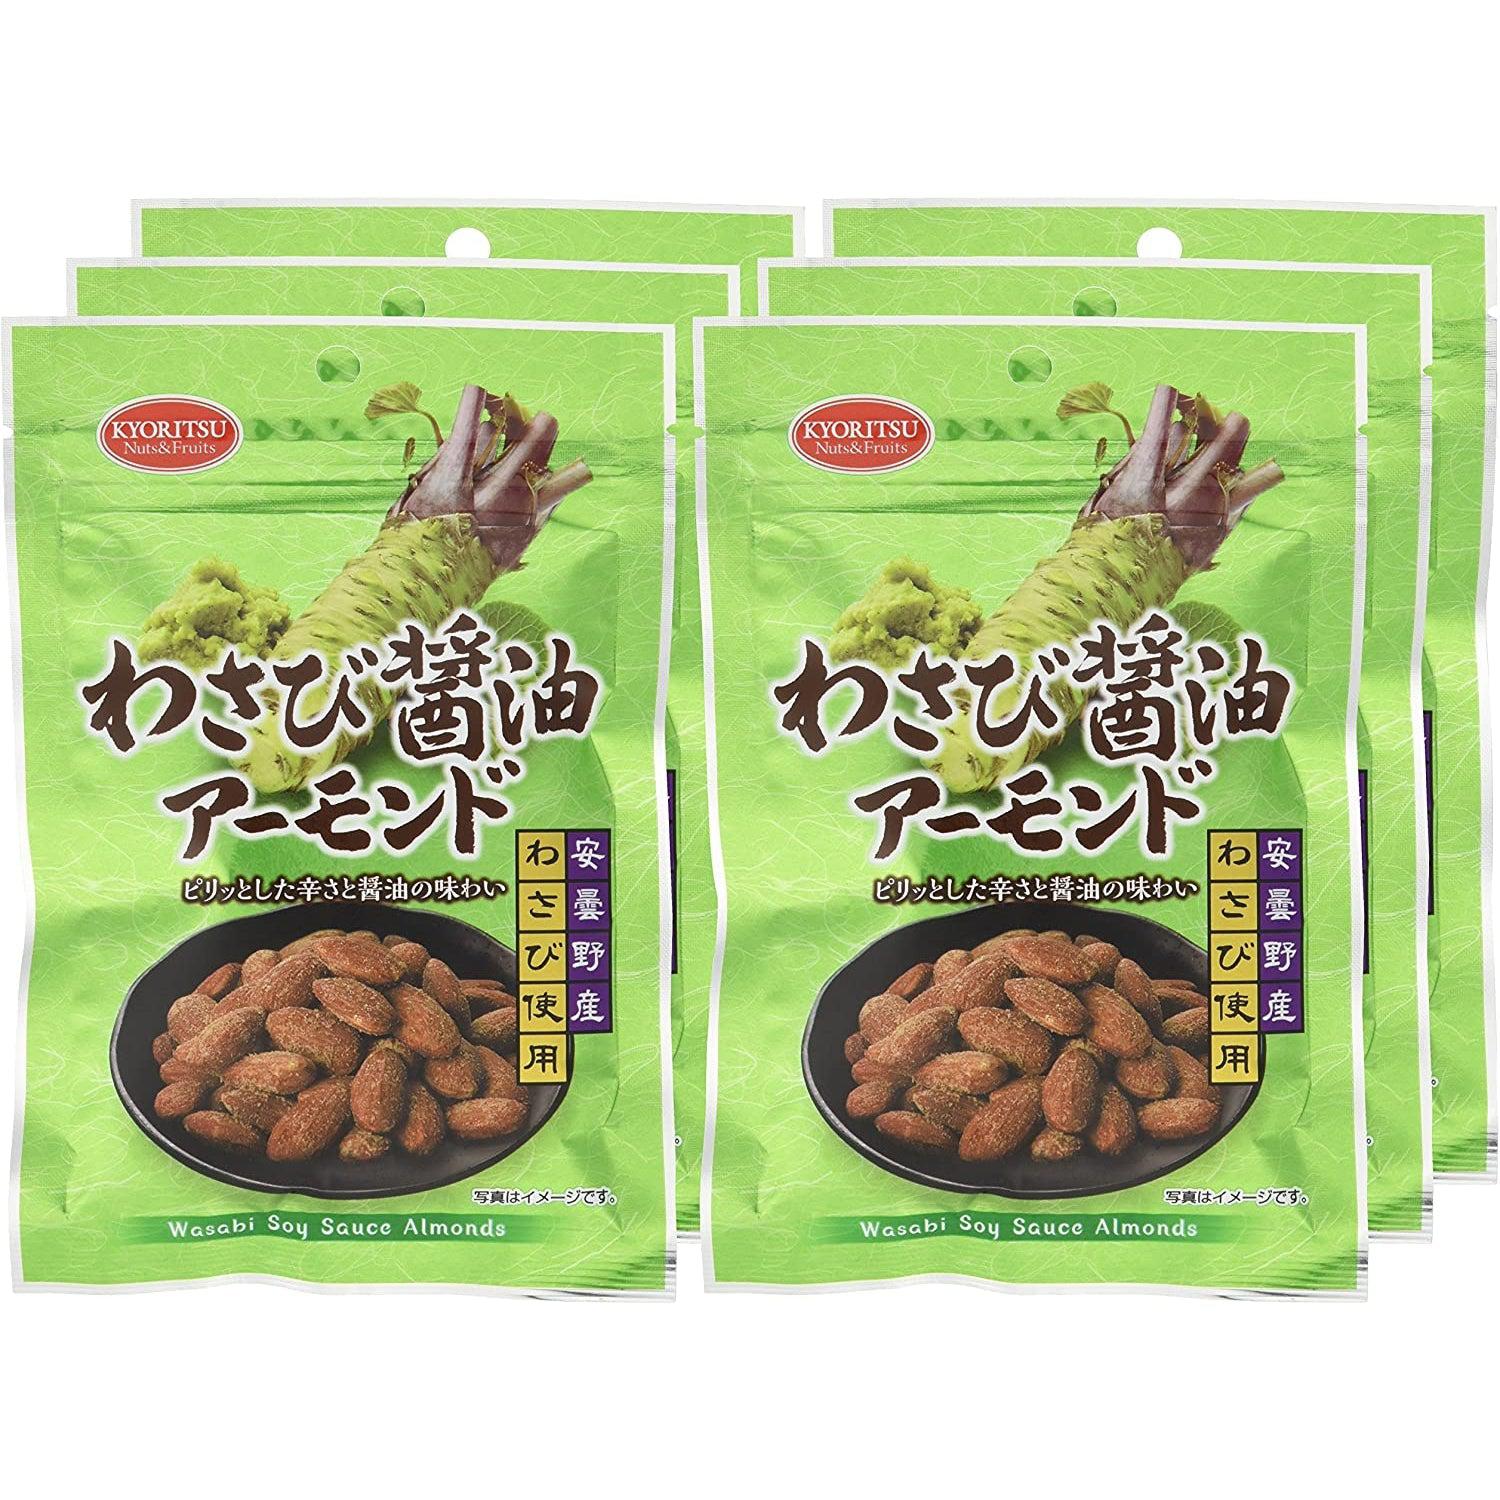 Kyoritsu Roasted Almond Snack Wasabi Soy Sauce Flavor 45g (Pack of 6)